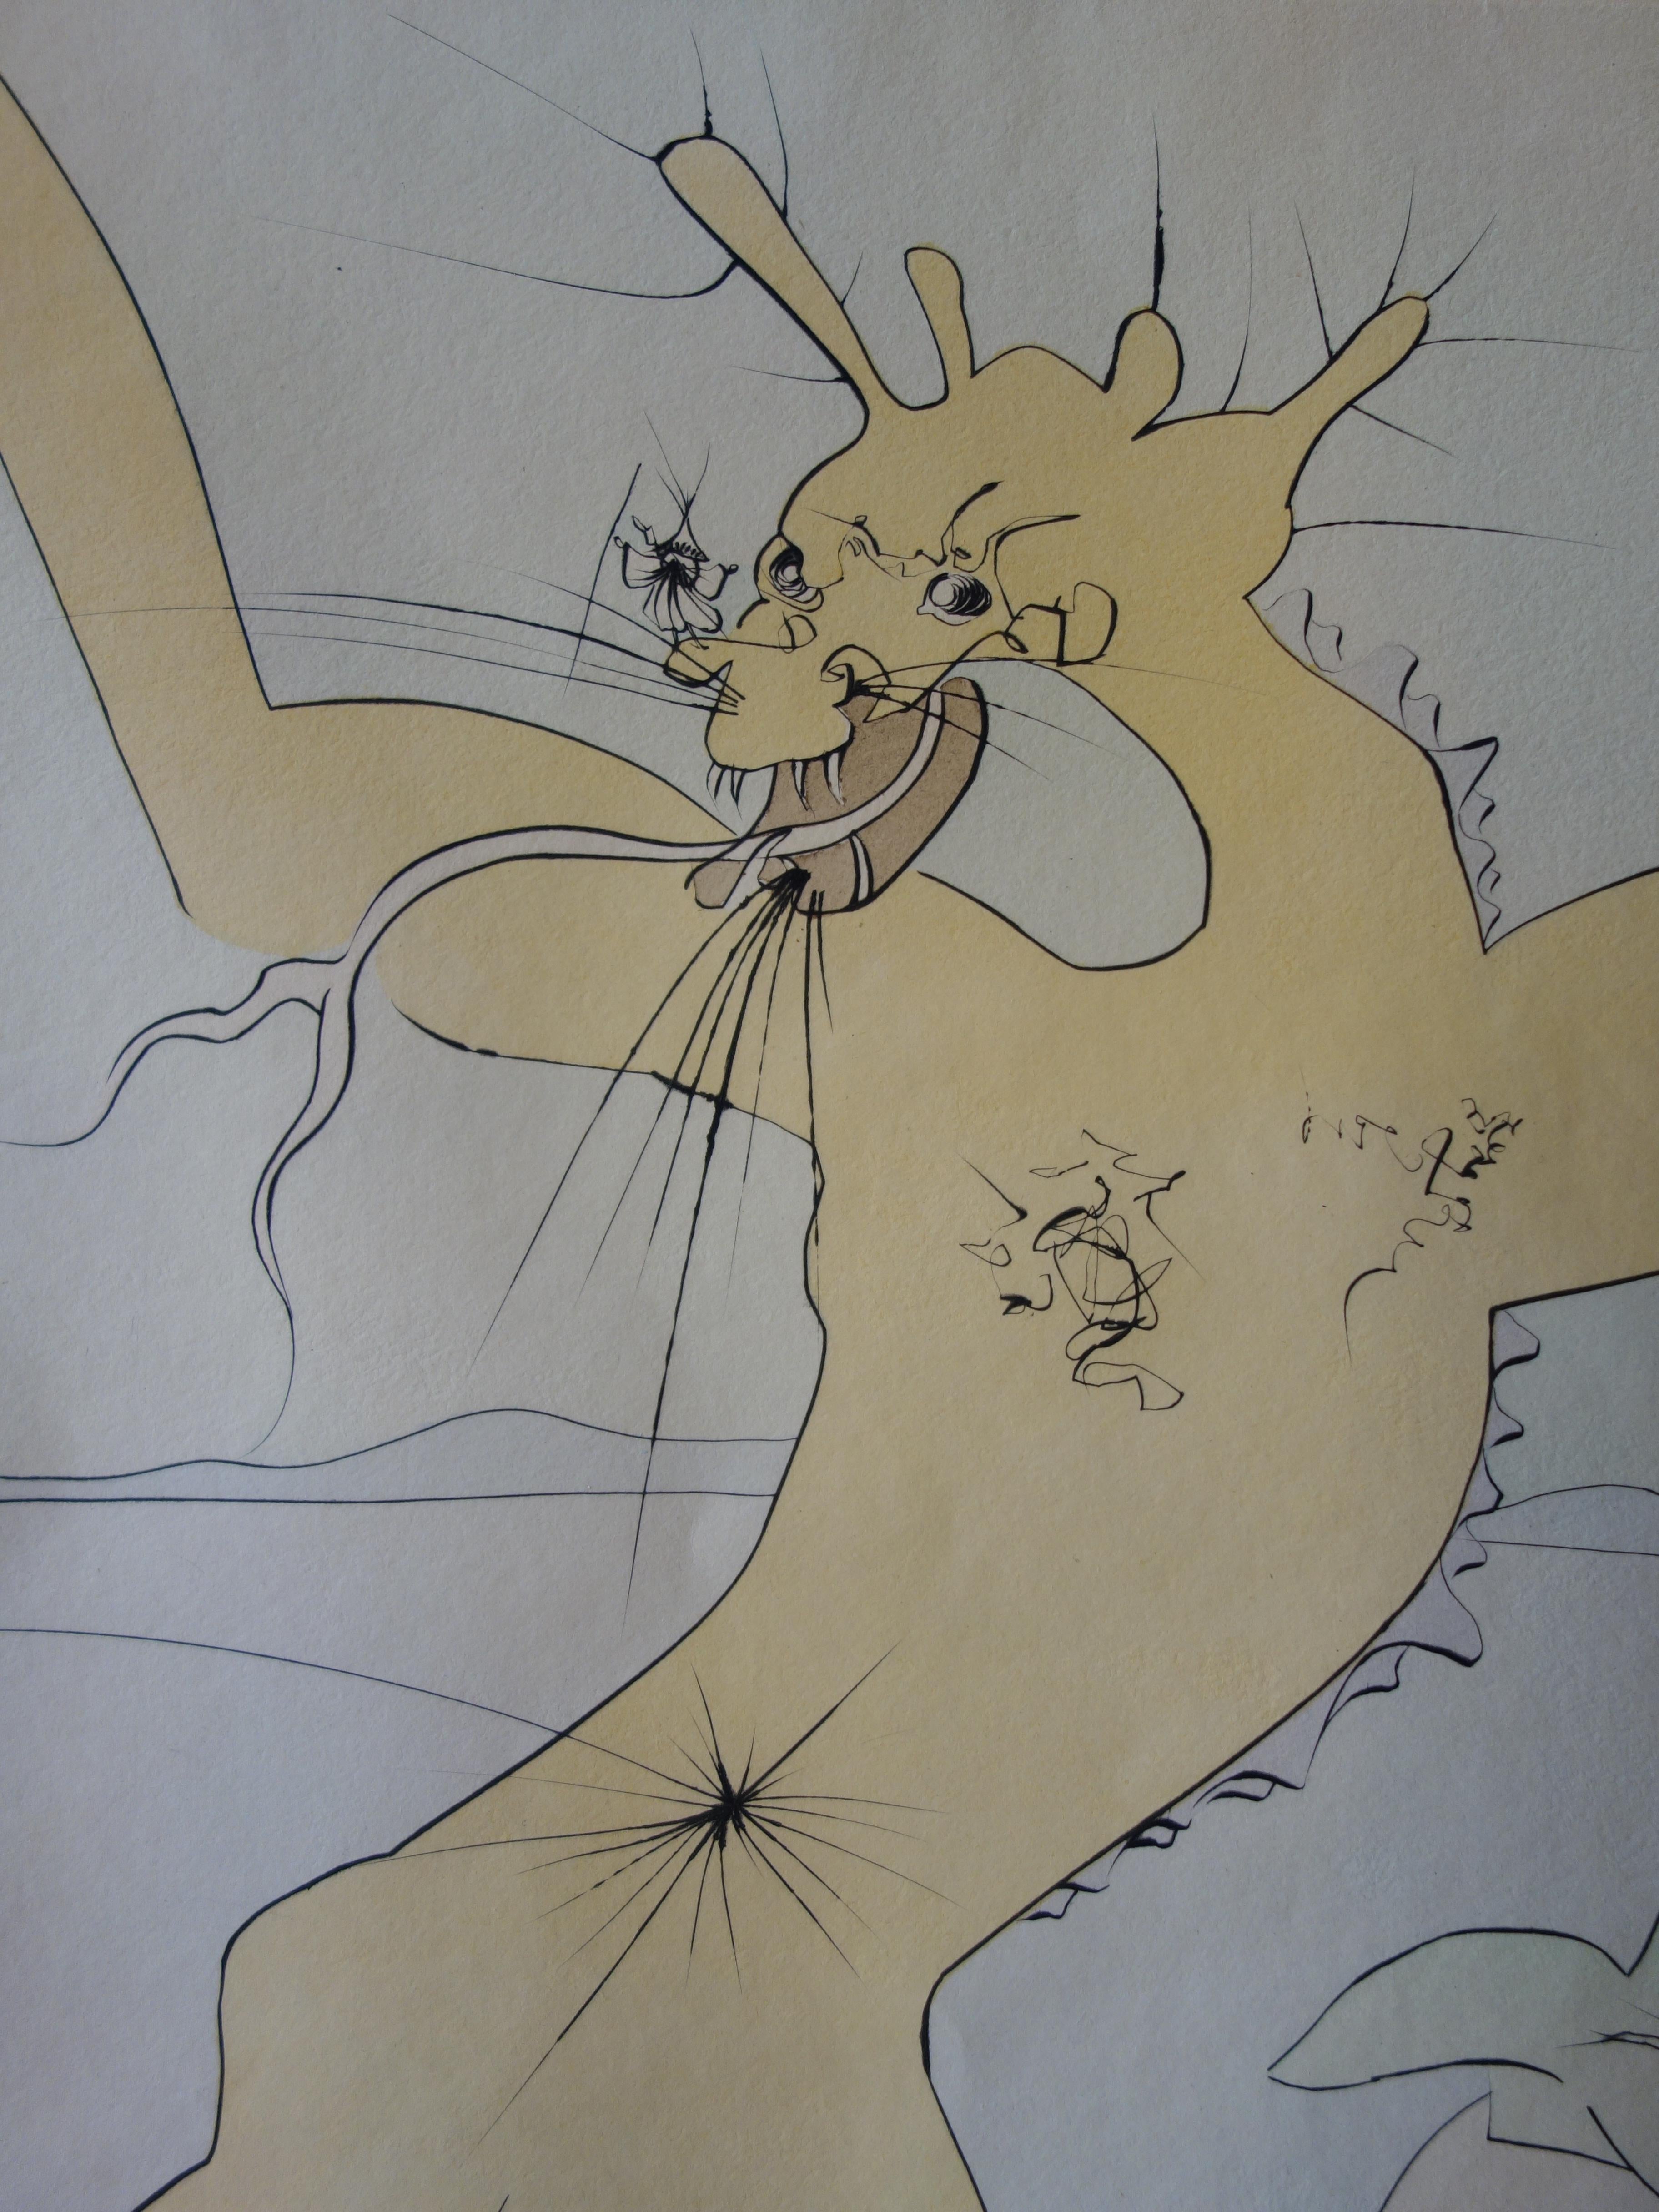 Shunboshi : Little one-inch - Original handsigned etching / 75ex - Surrealist Print by Salvador Dalí